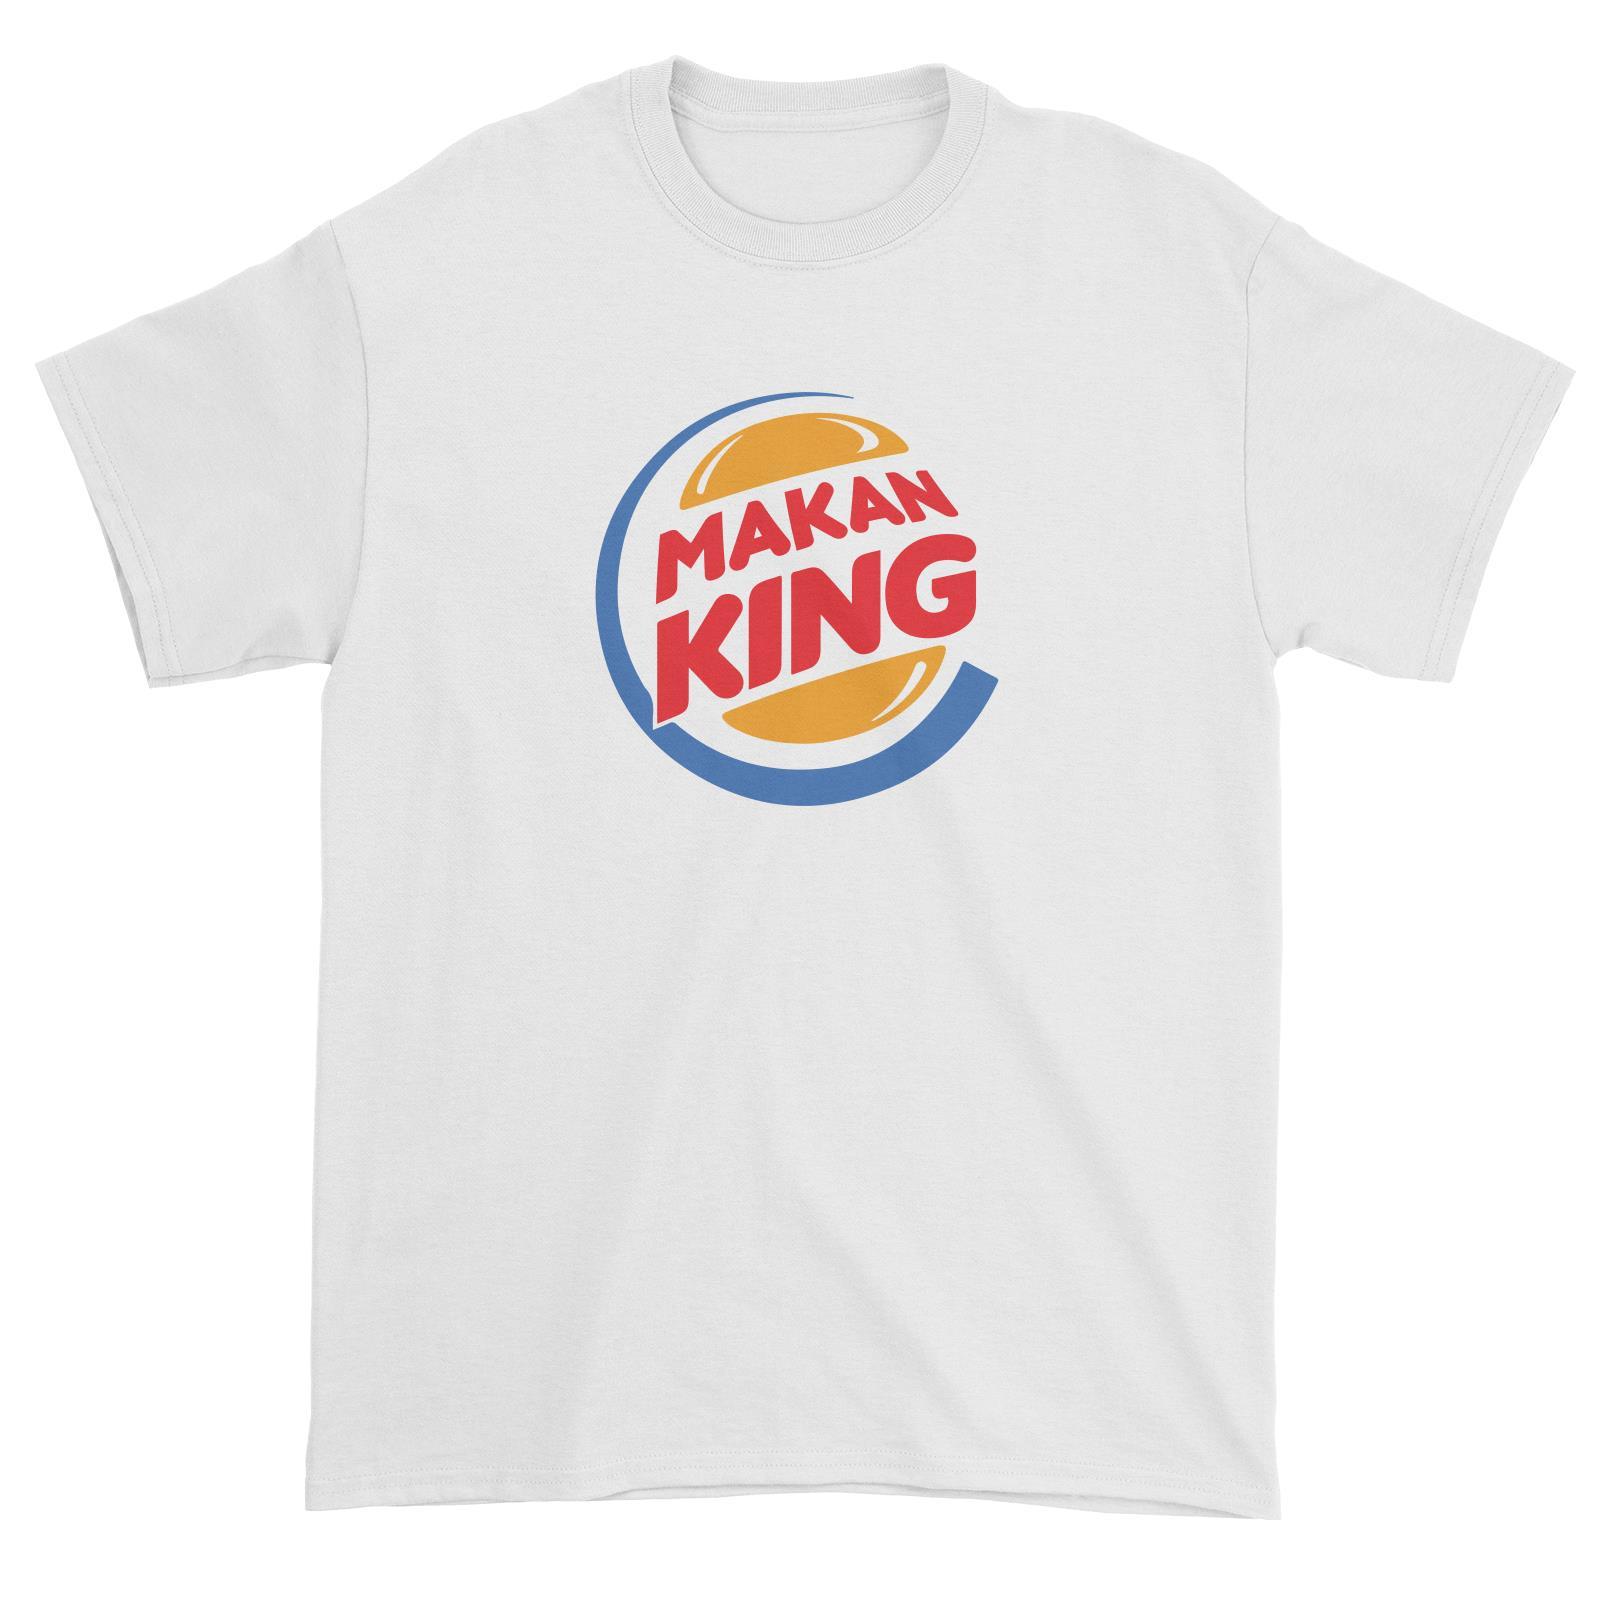 Slang Statement Makan King Unisex T-Shirt